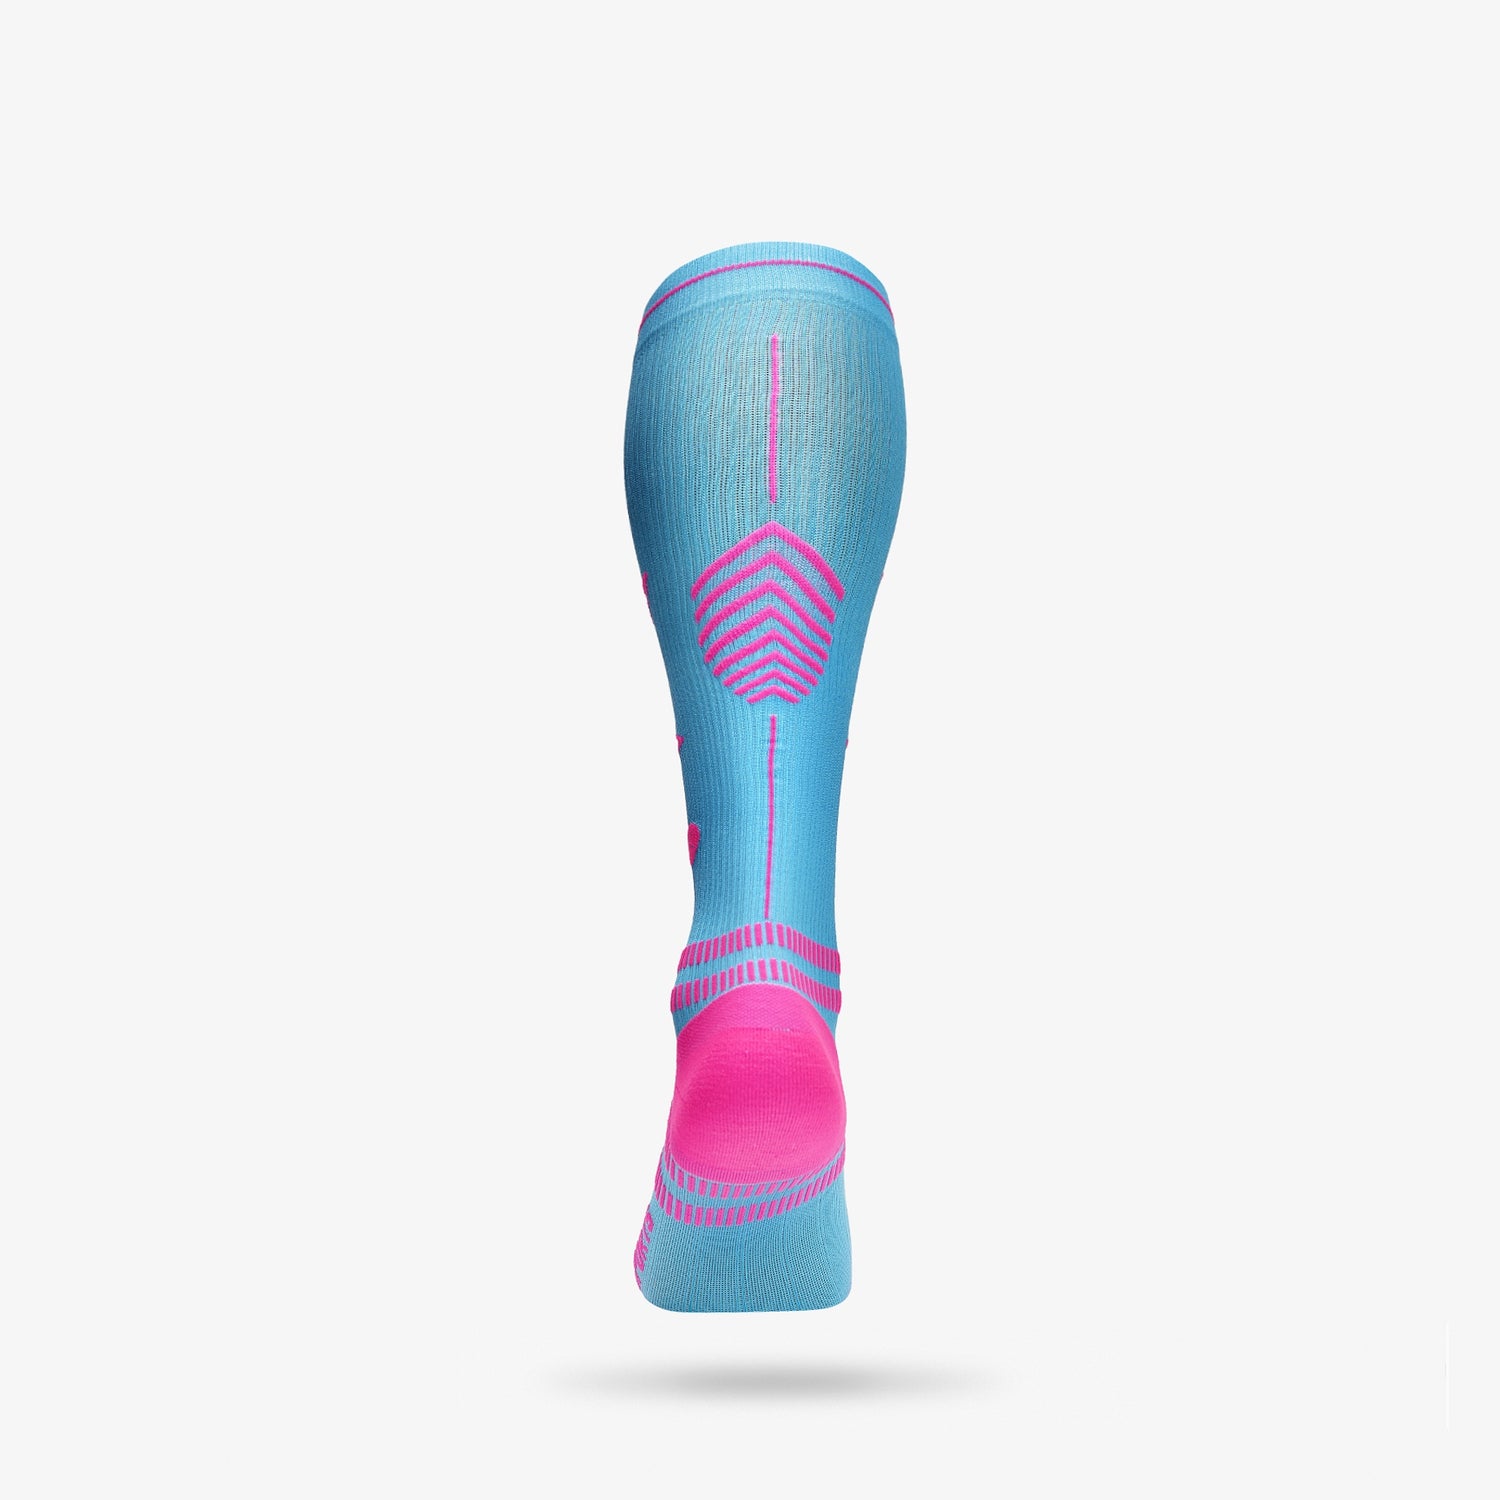 STOX Energy Socks - Sports Socks for Women - Premium Compression Socks ...